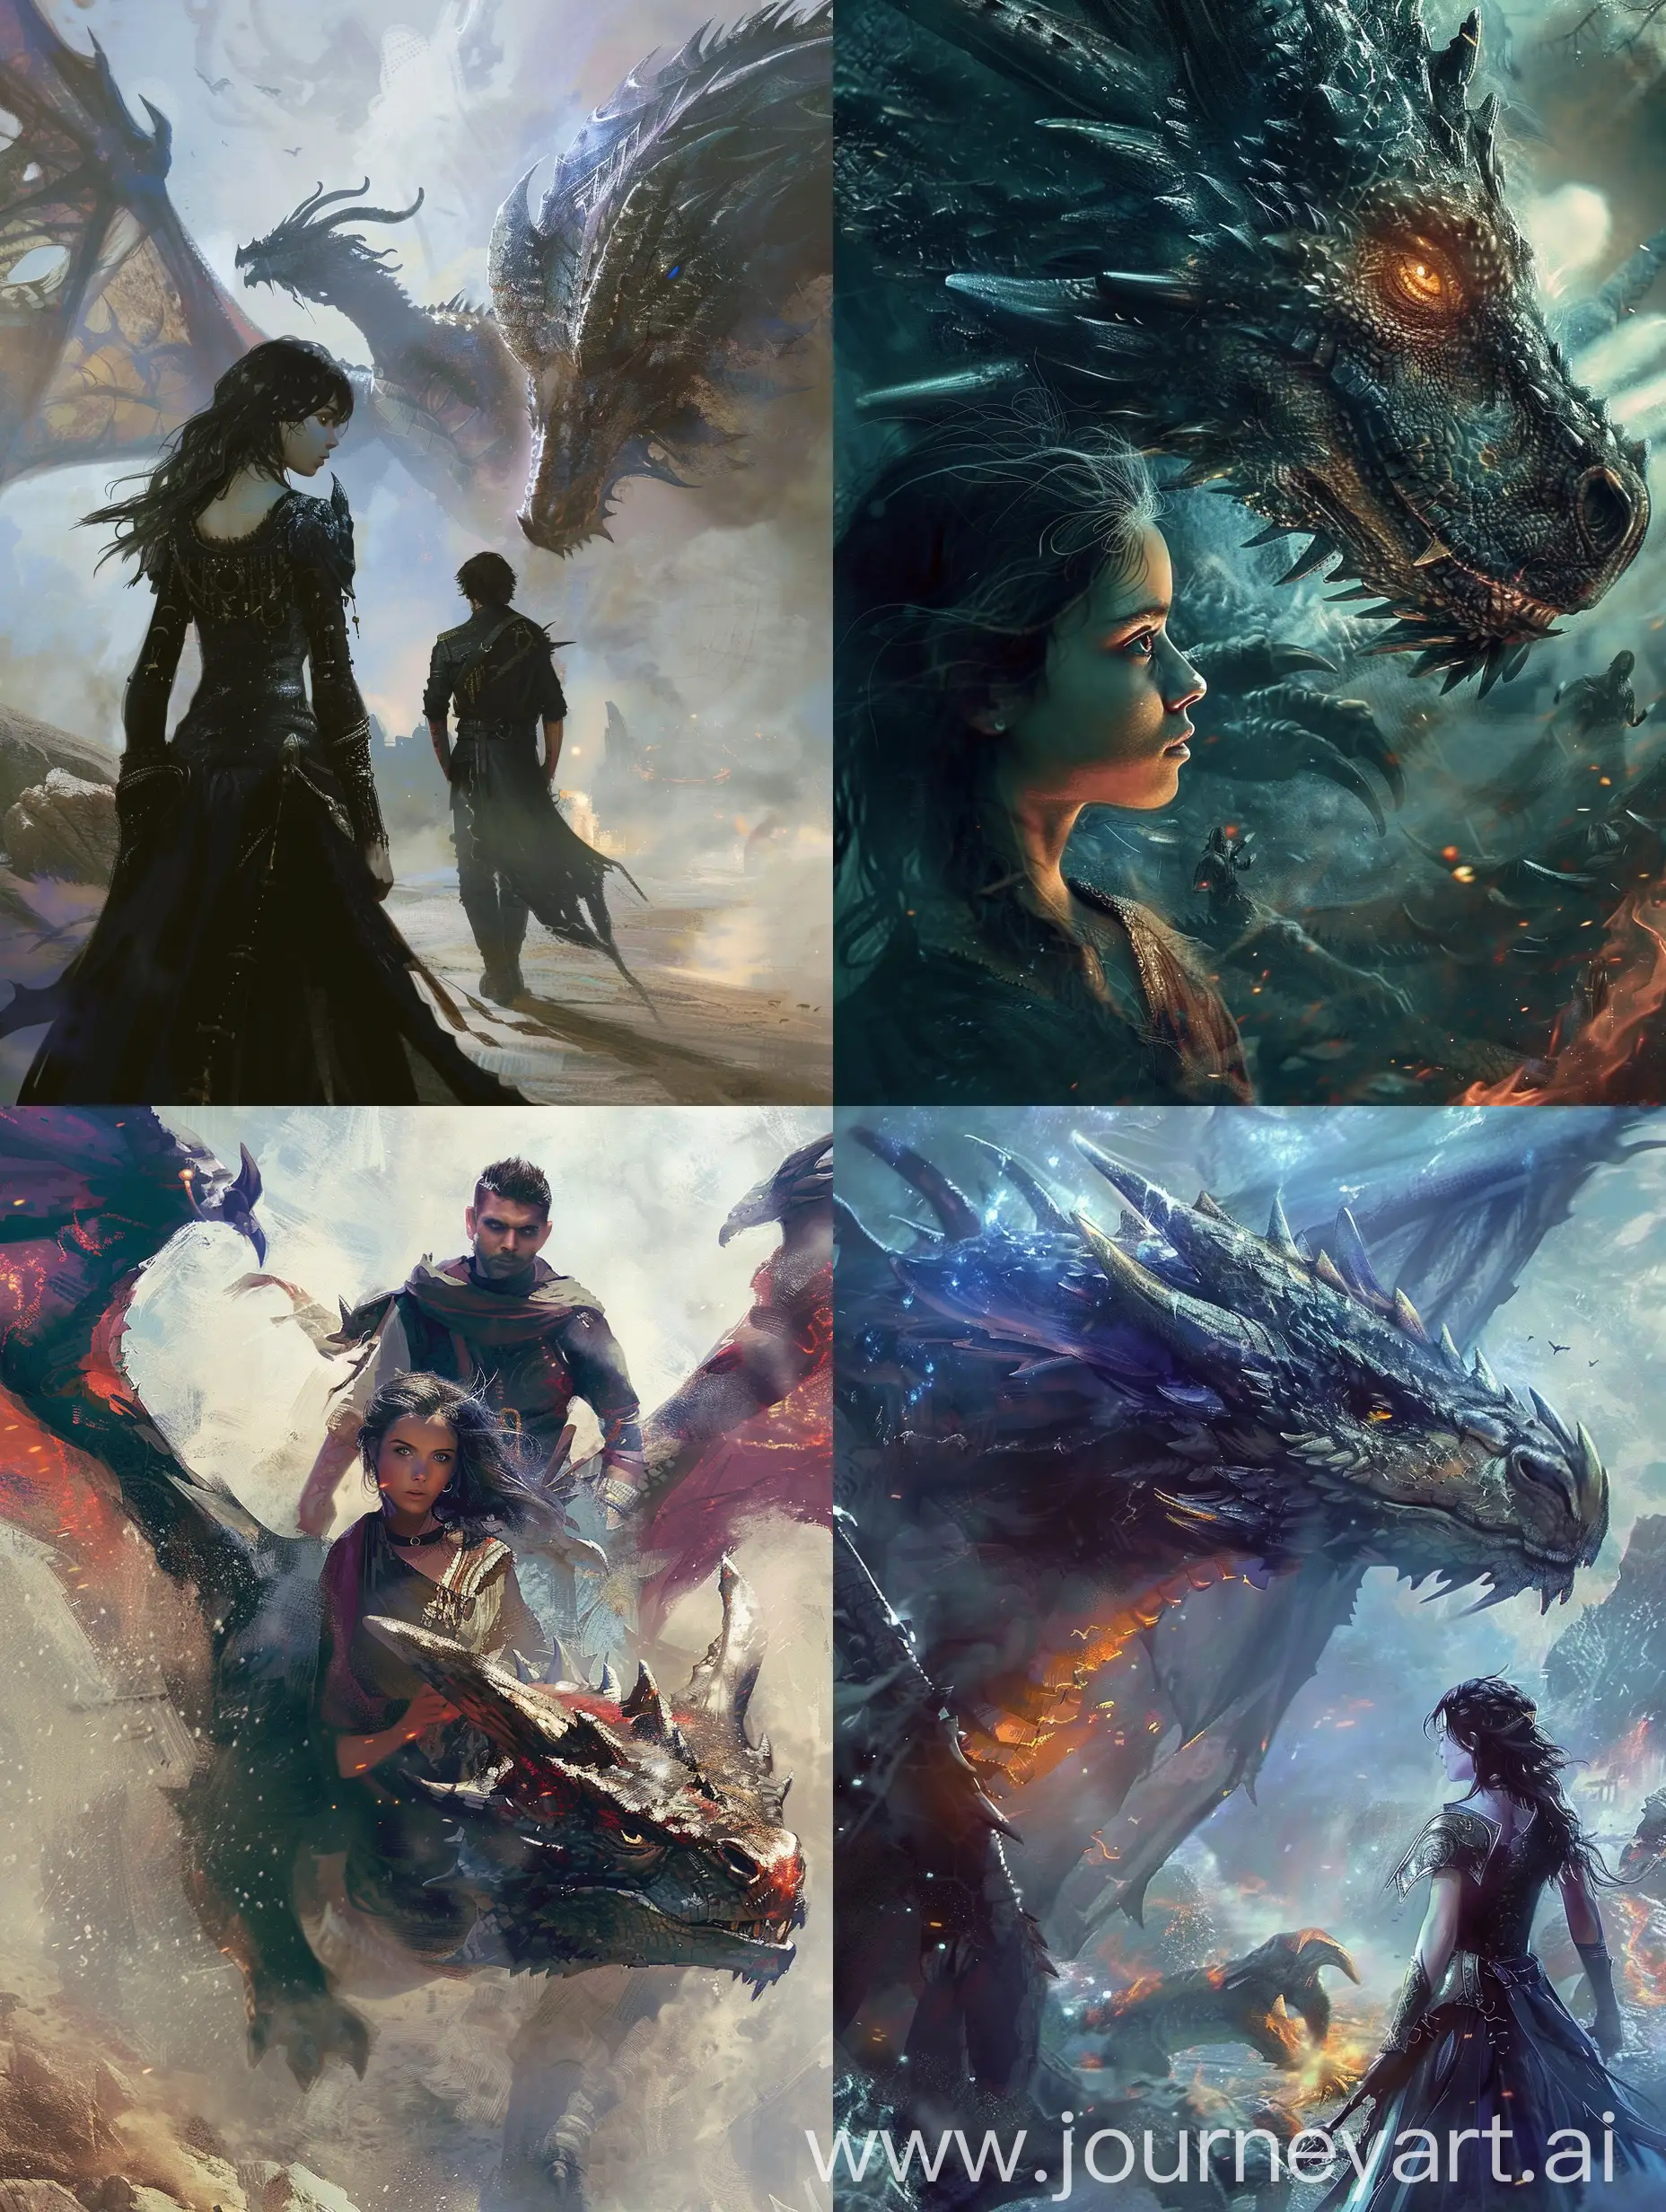 Fantasy-Adventure-DarkHaired-Girl-and-BlackClad-Man-Confront-Dragon